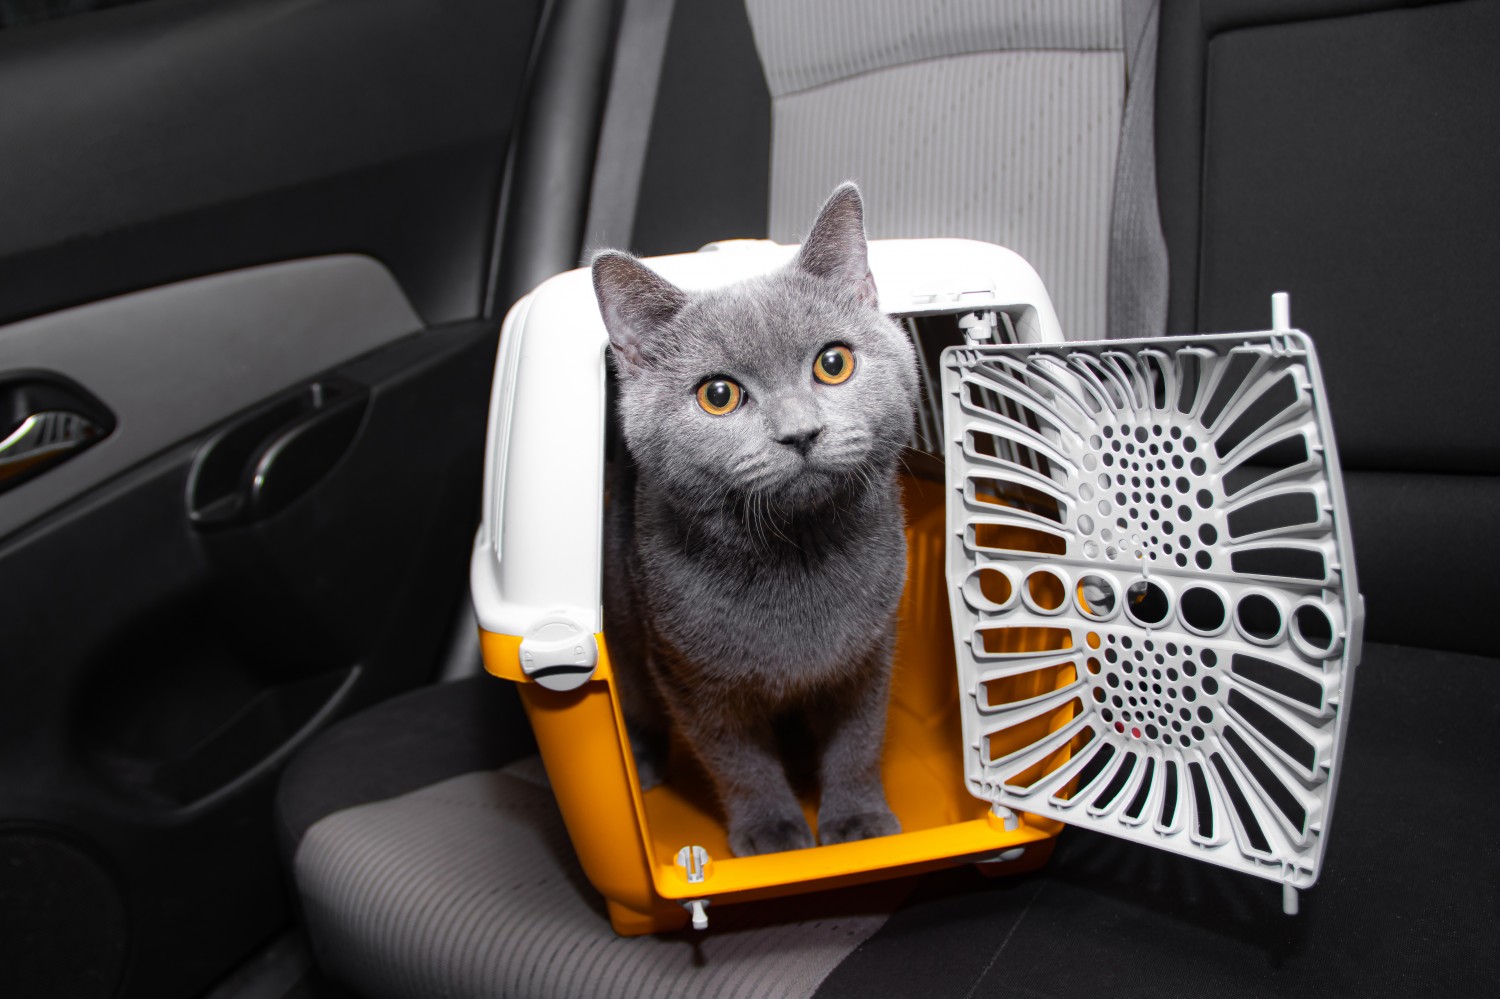 Health Cert - Cat in Carrier in Car